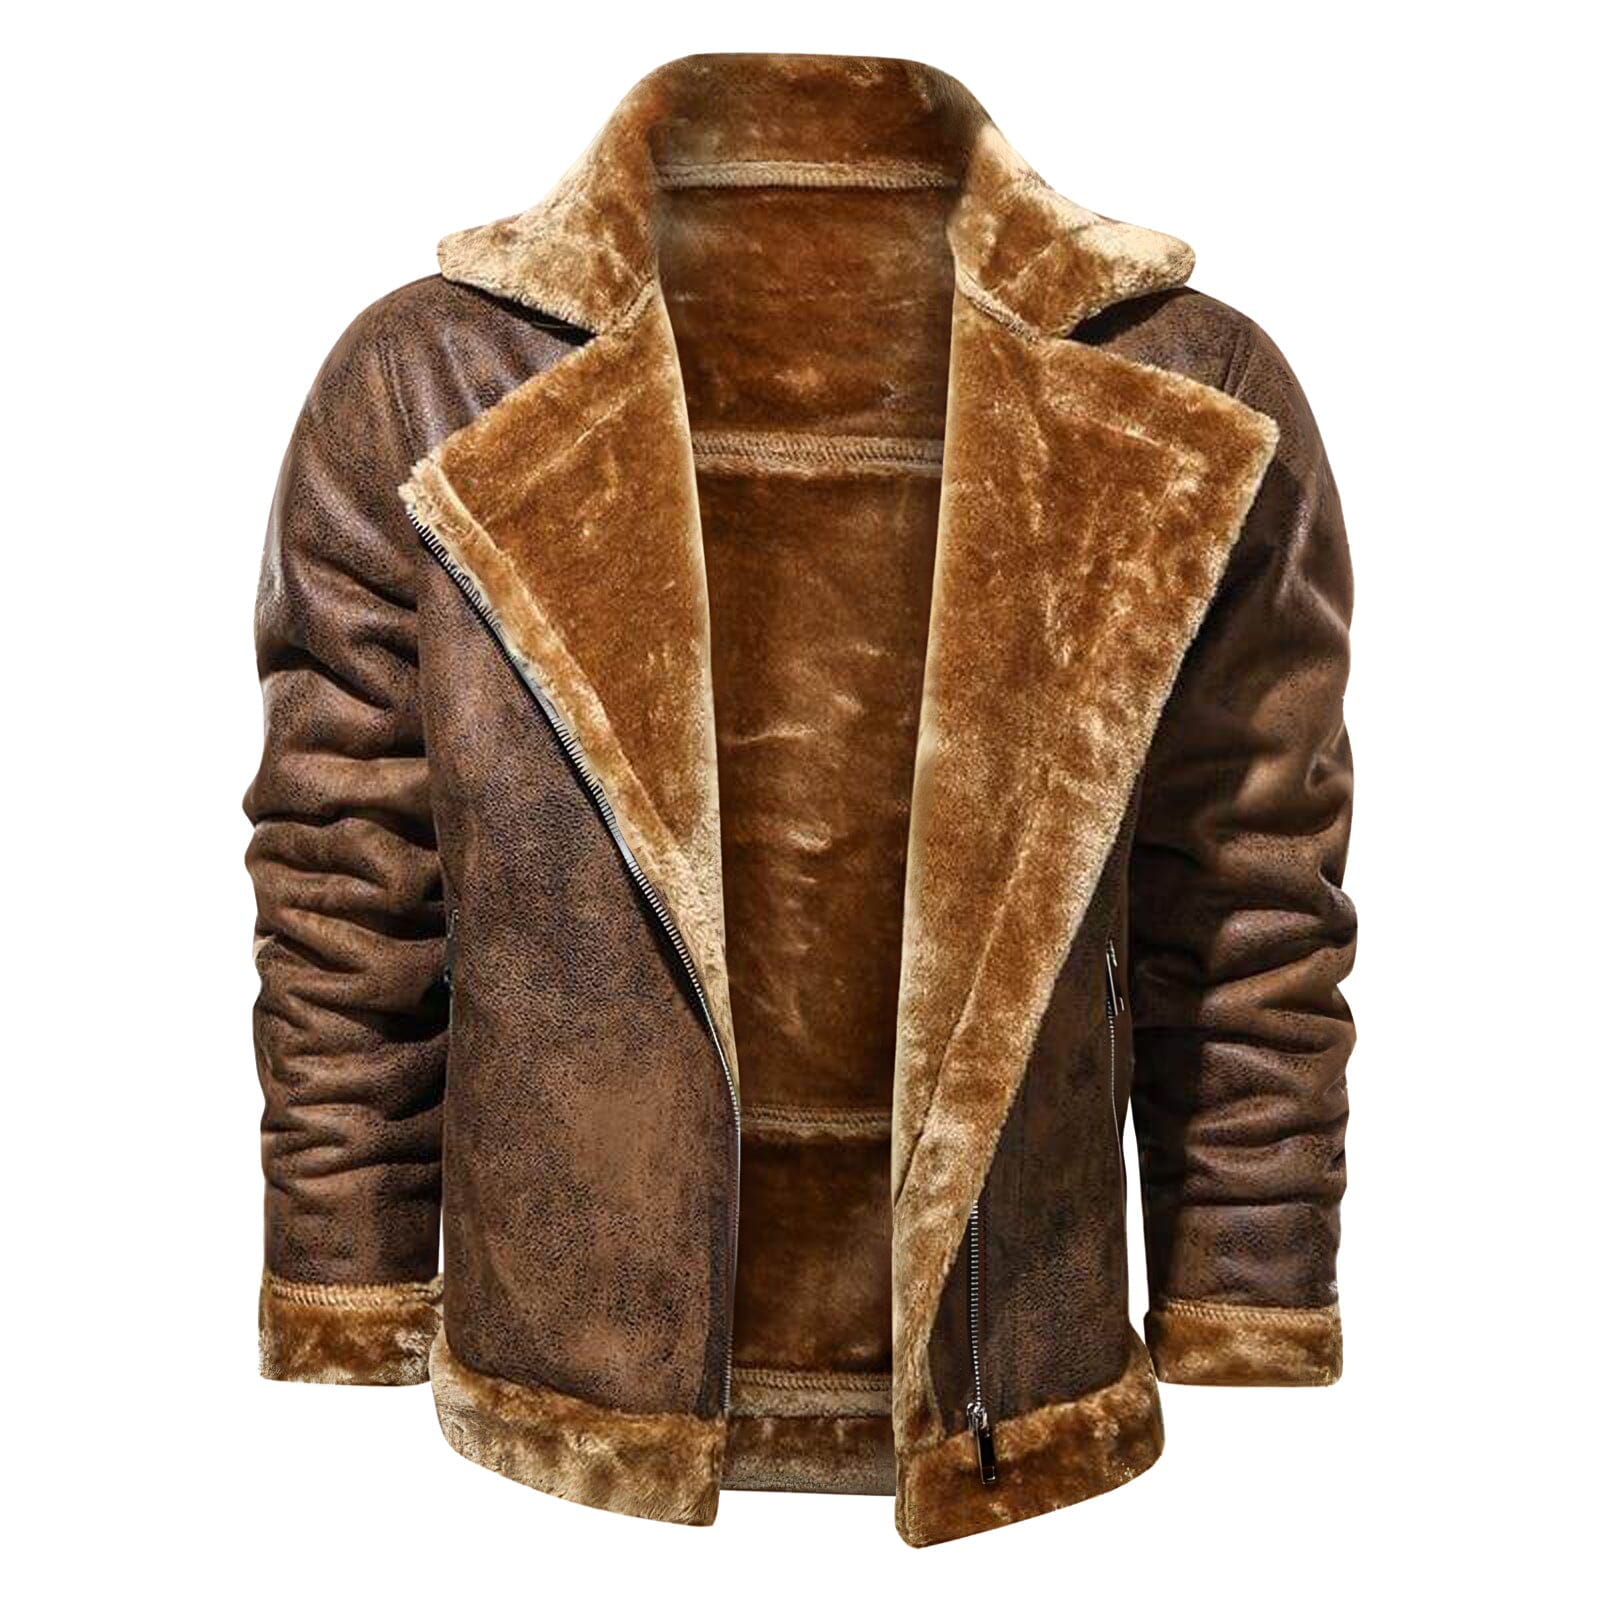 The Direwolf Faux Fur Winter Jacket - Brown Shop5798684 Store S 